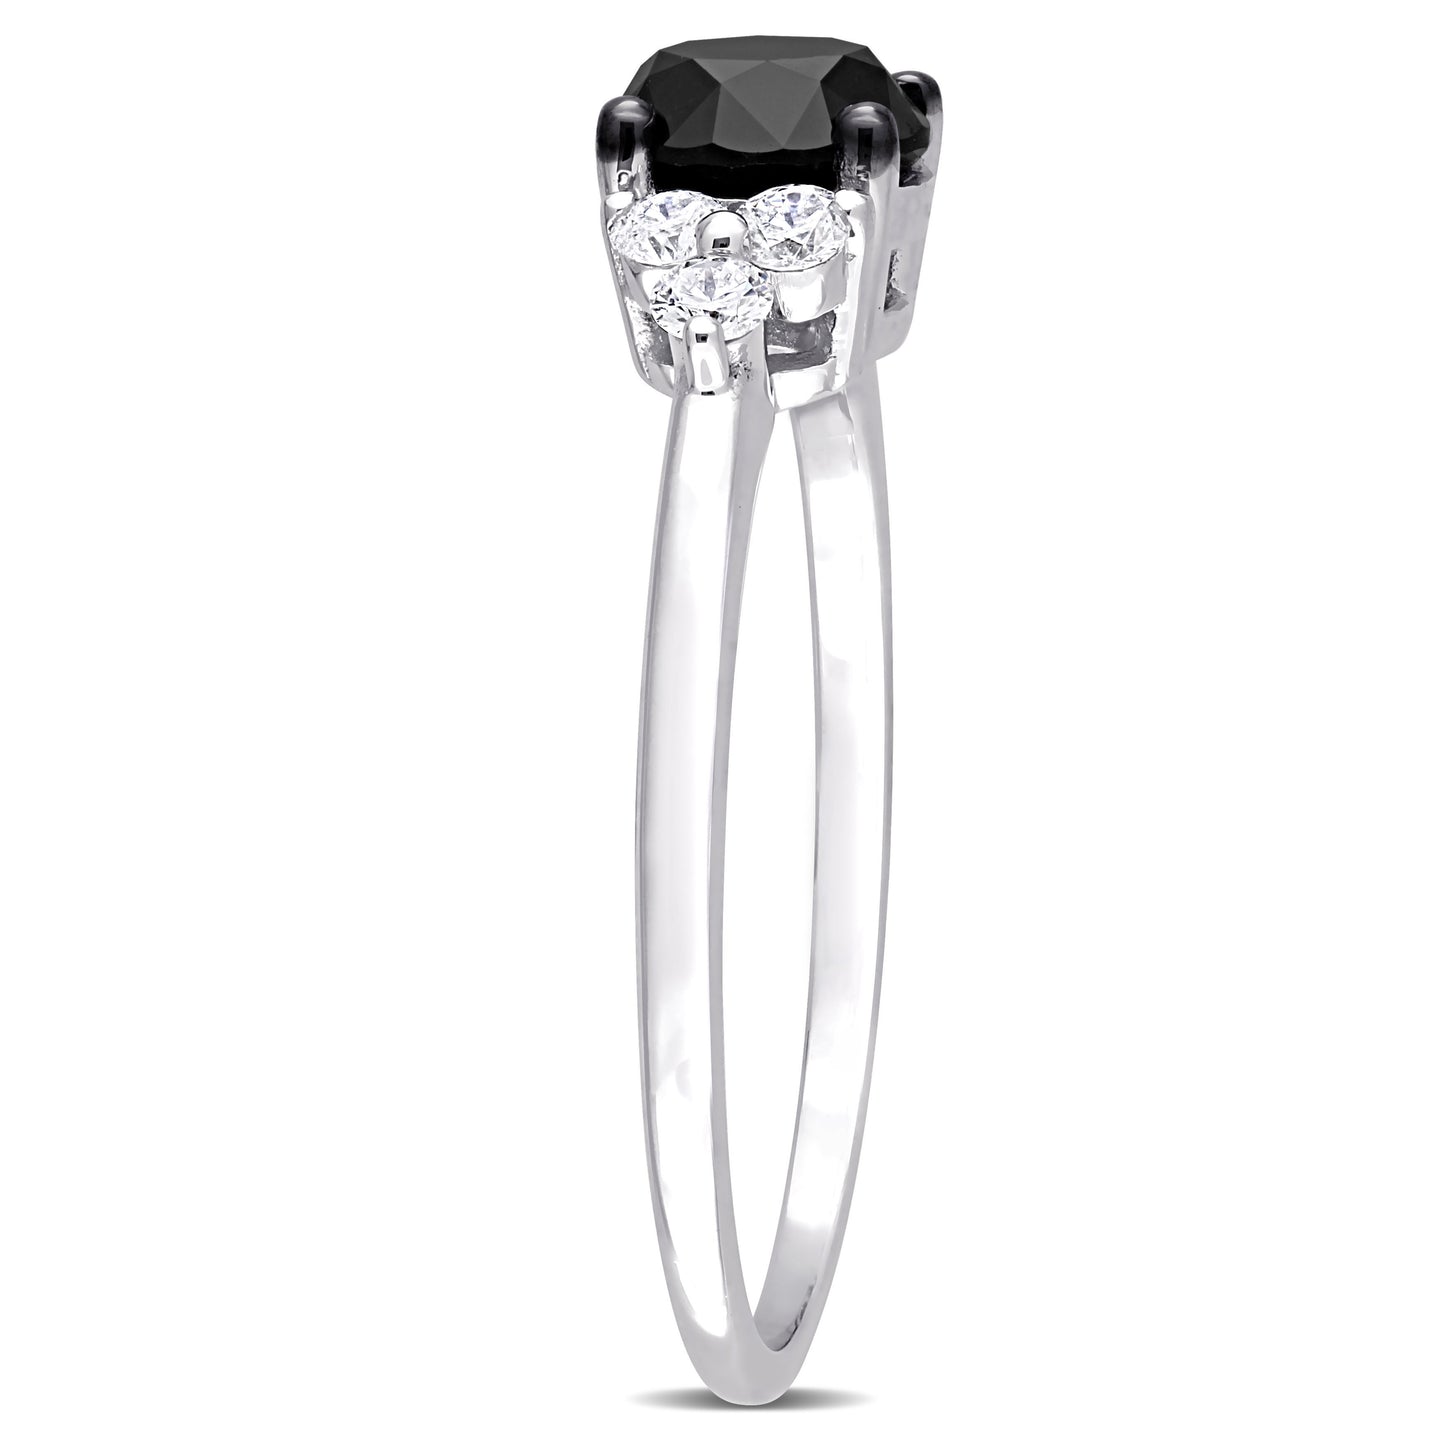 Round Black and White Diamond Engagement Ring in 10k White Gold